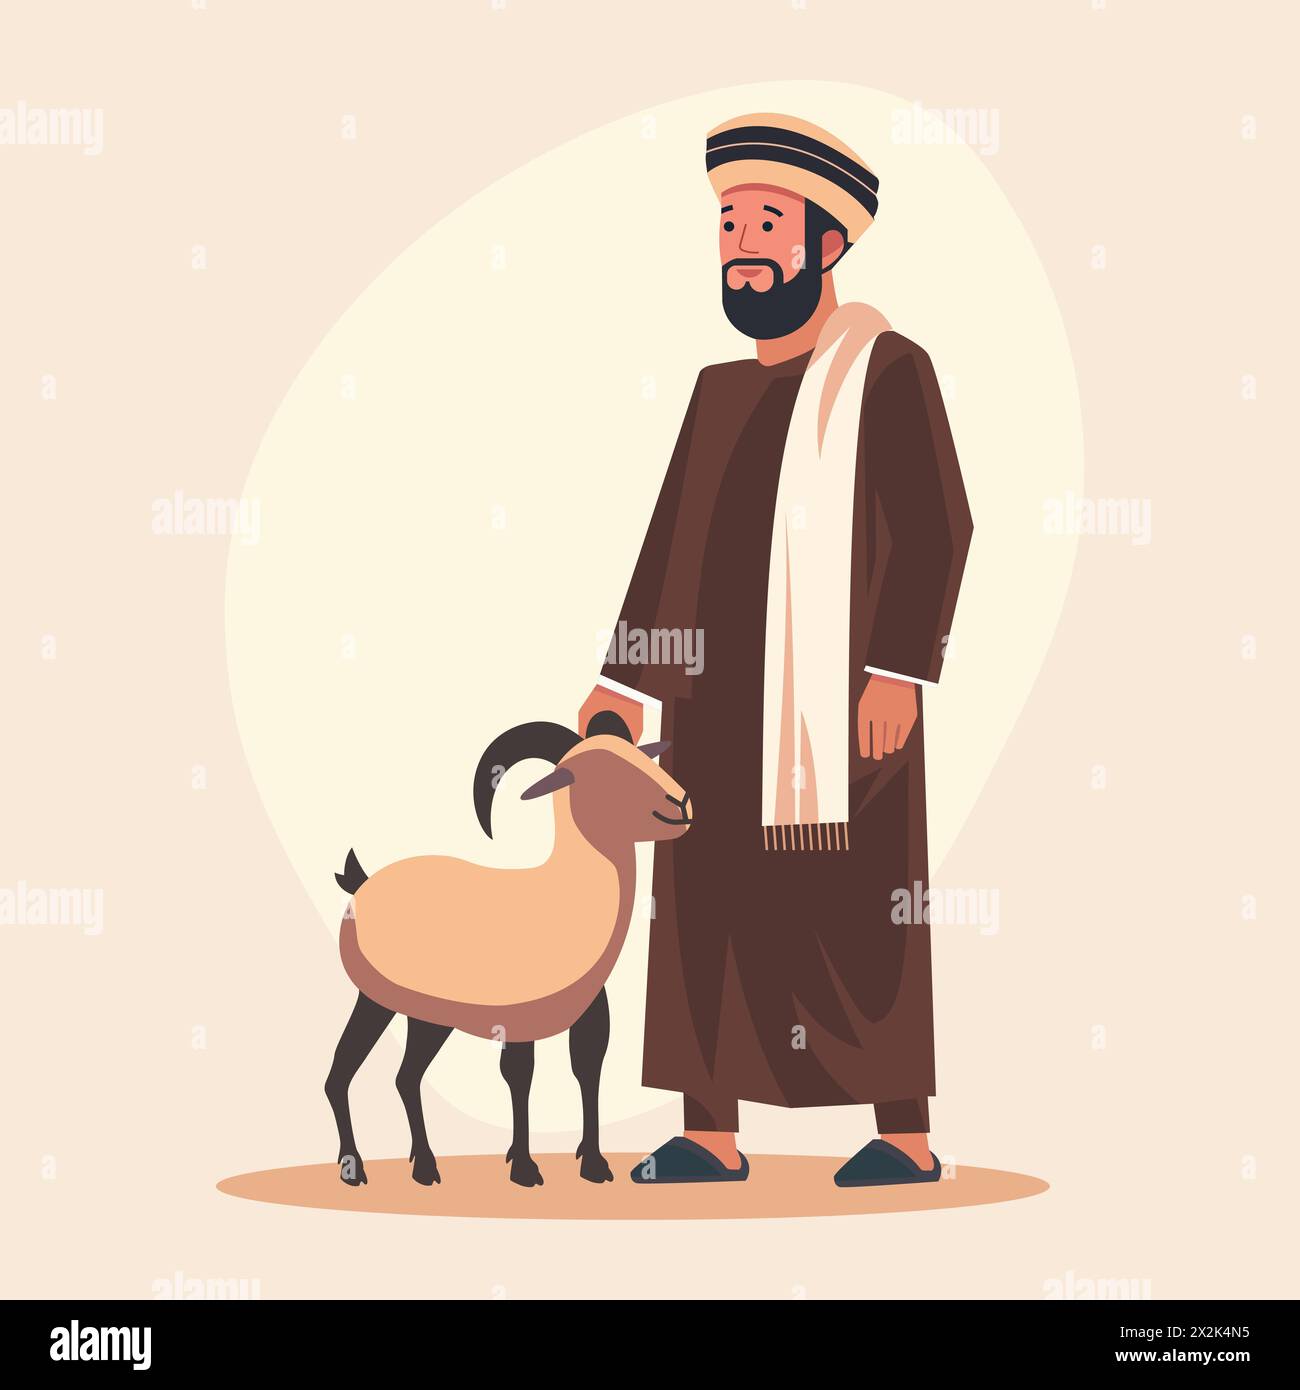 Islamic Arabian Muslim Man with Sheep Goat in Eid Al Adha Celebration Stock Vector